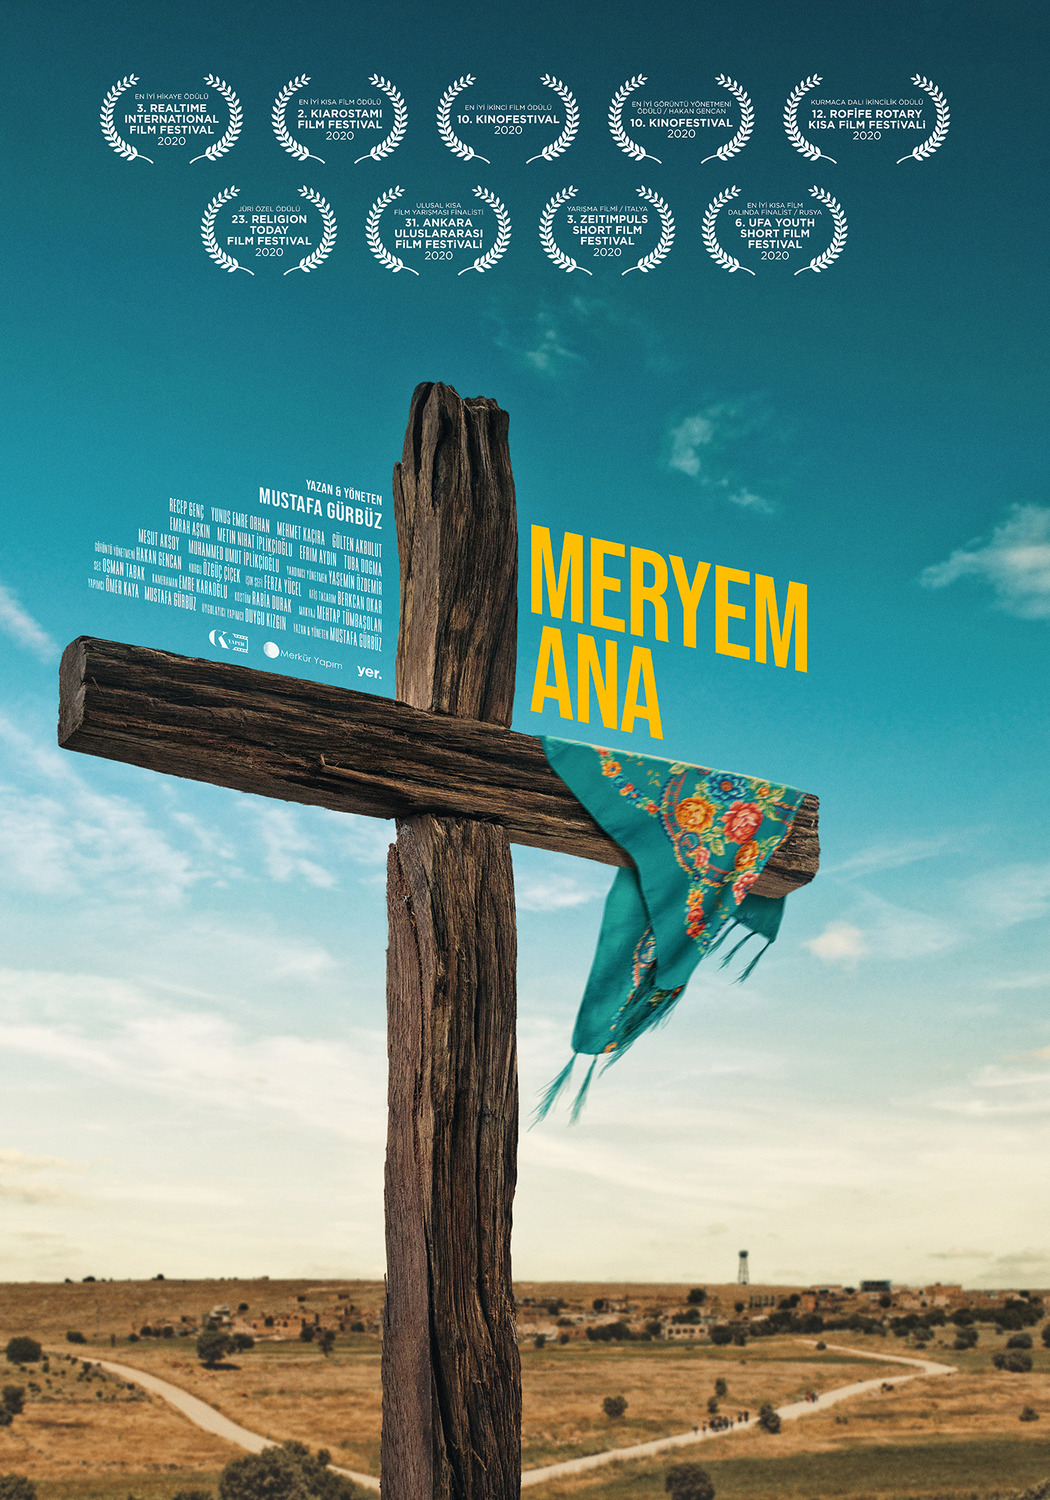 Extra Large Movie Poster Image for Meryem Ana 